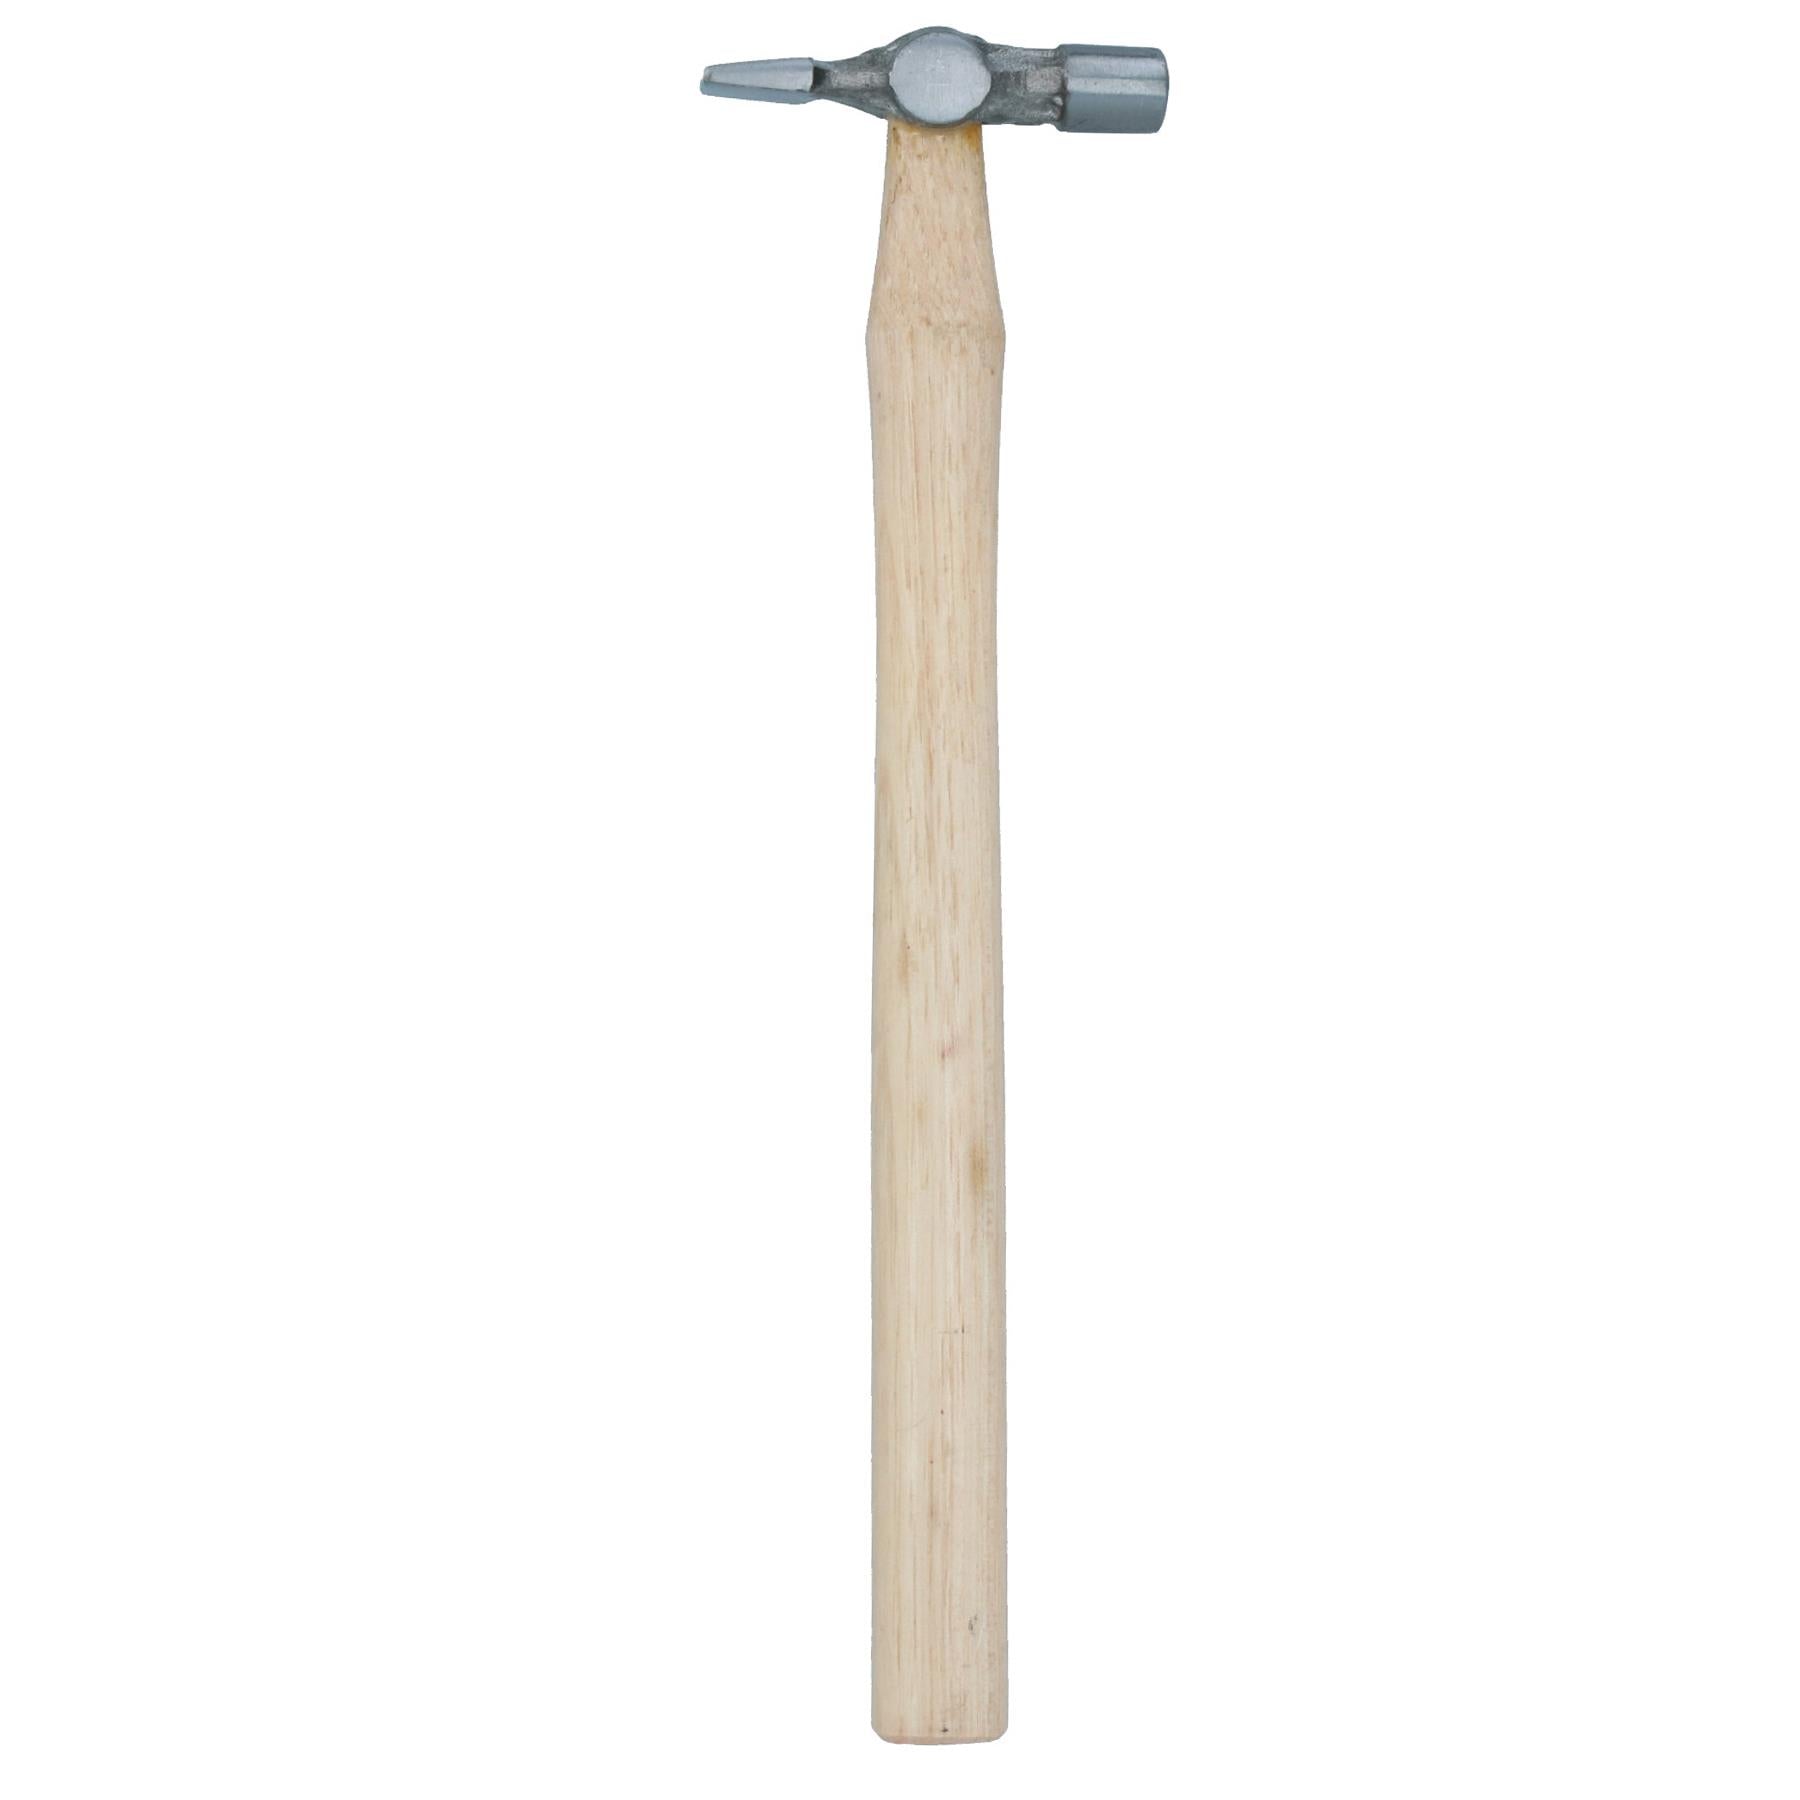 4oz Cross Pein Hammer Hickory Handle Carpenters Wood Work Panel Nails